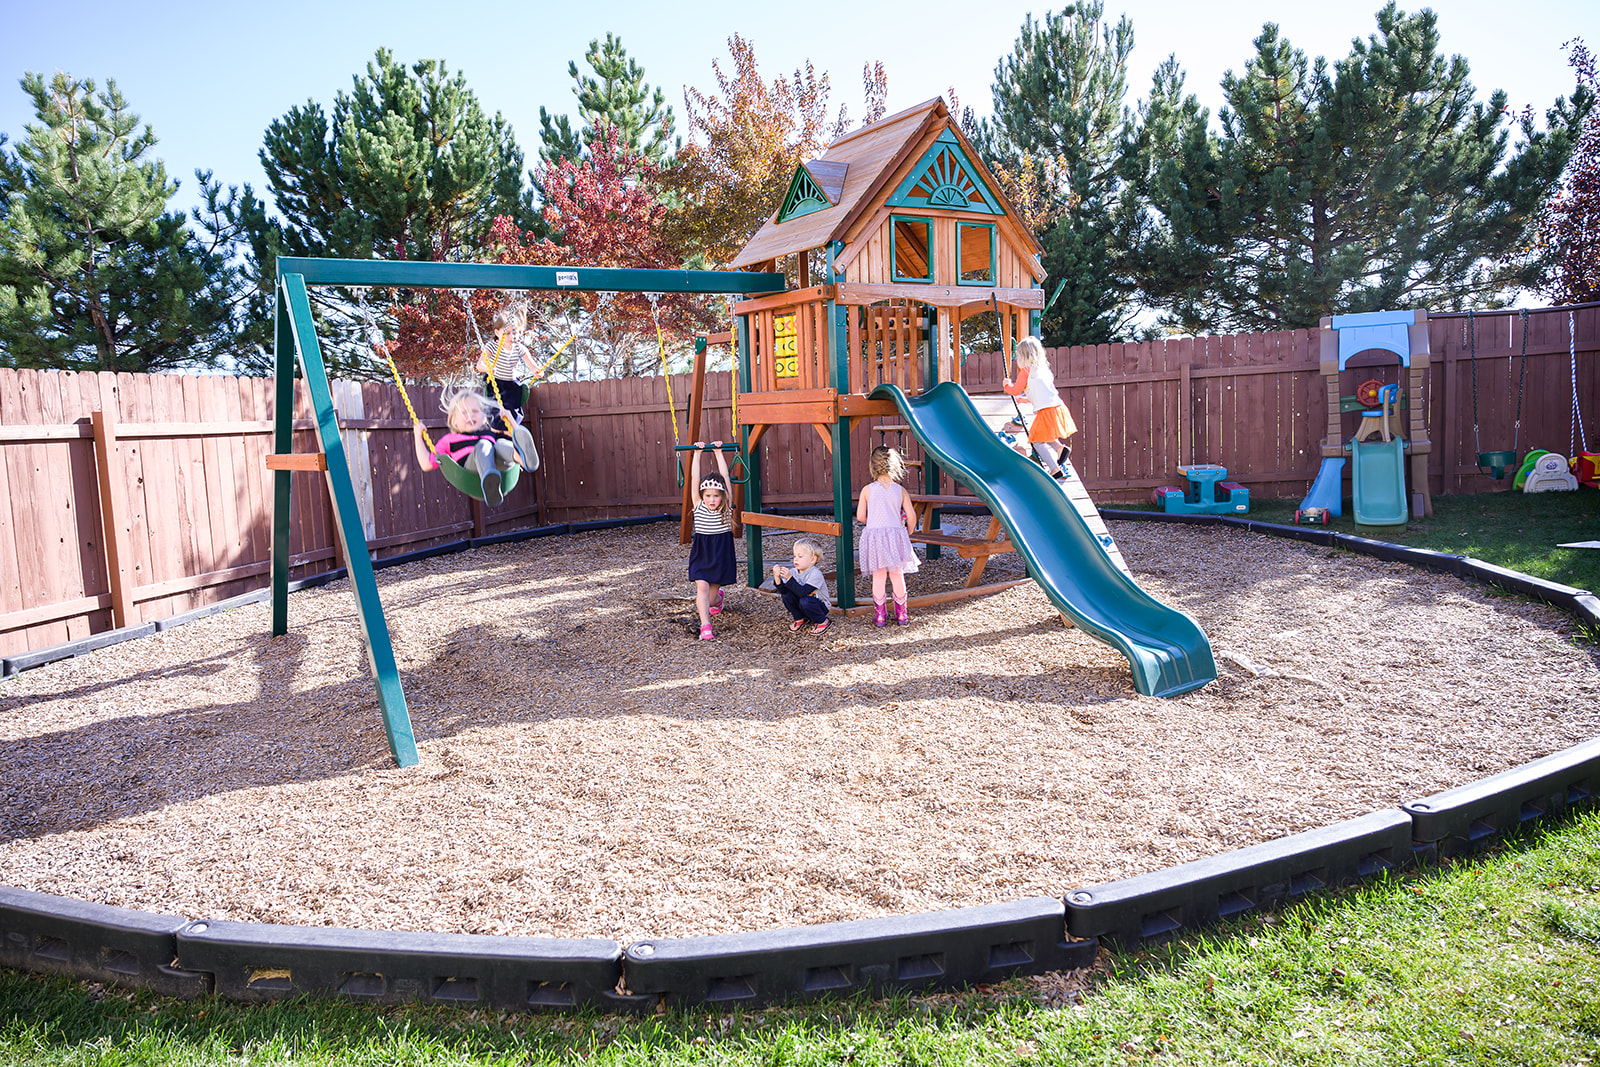 The Ridge outdoor play area